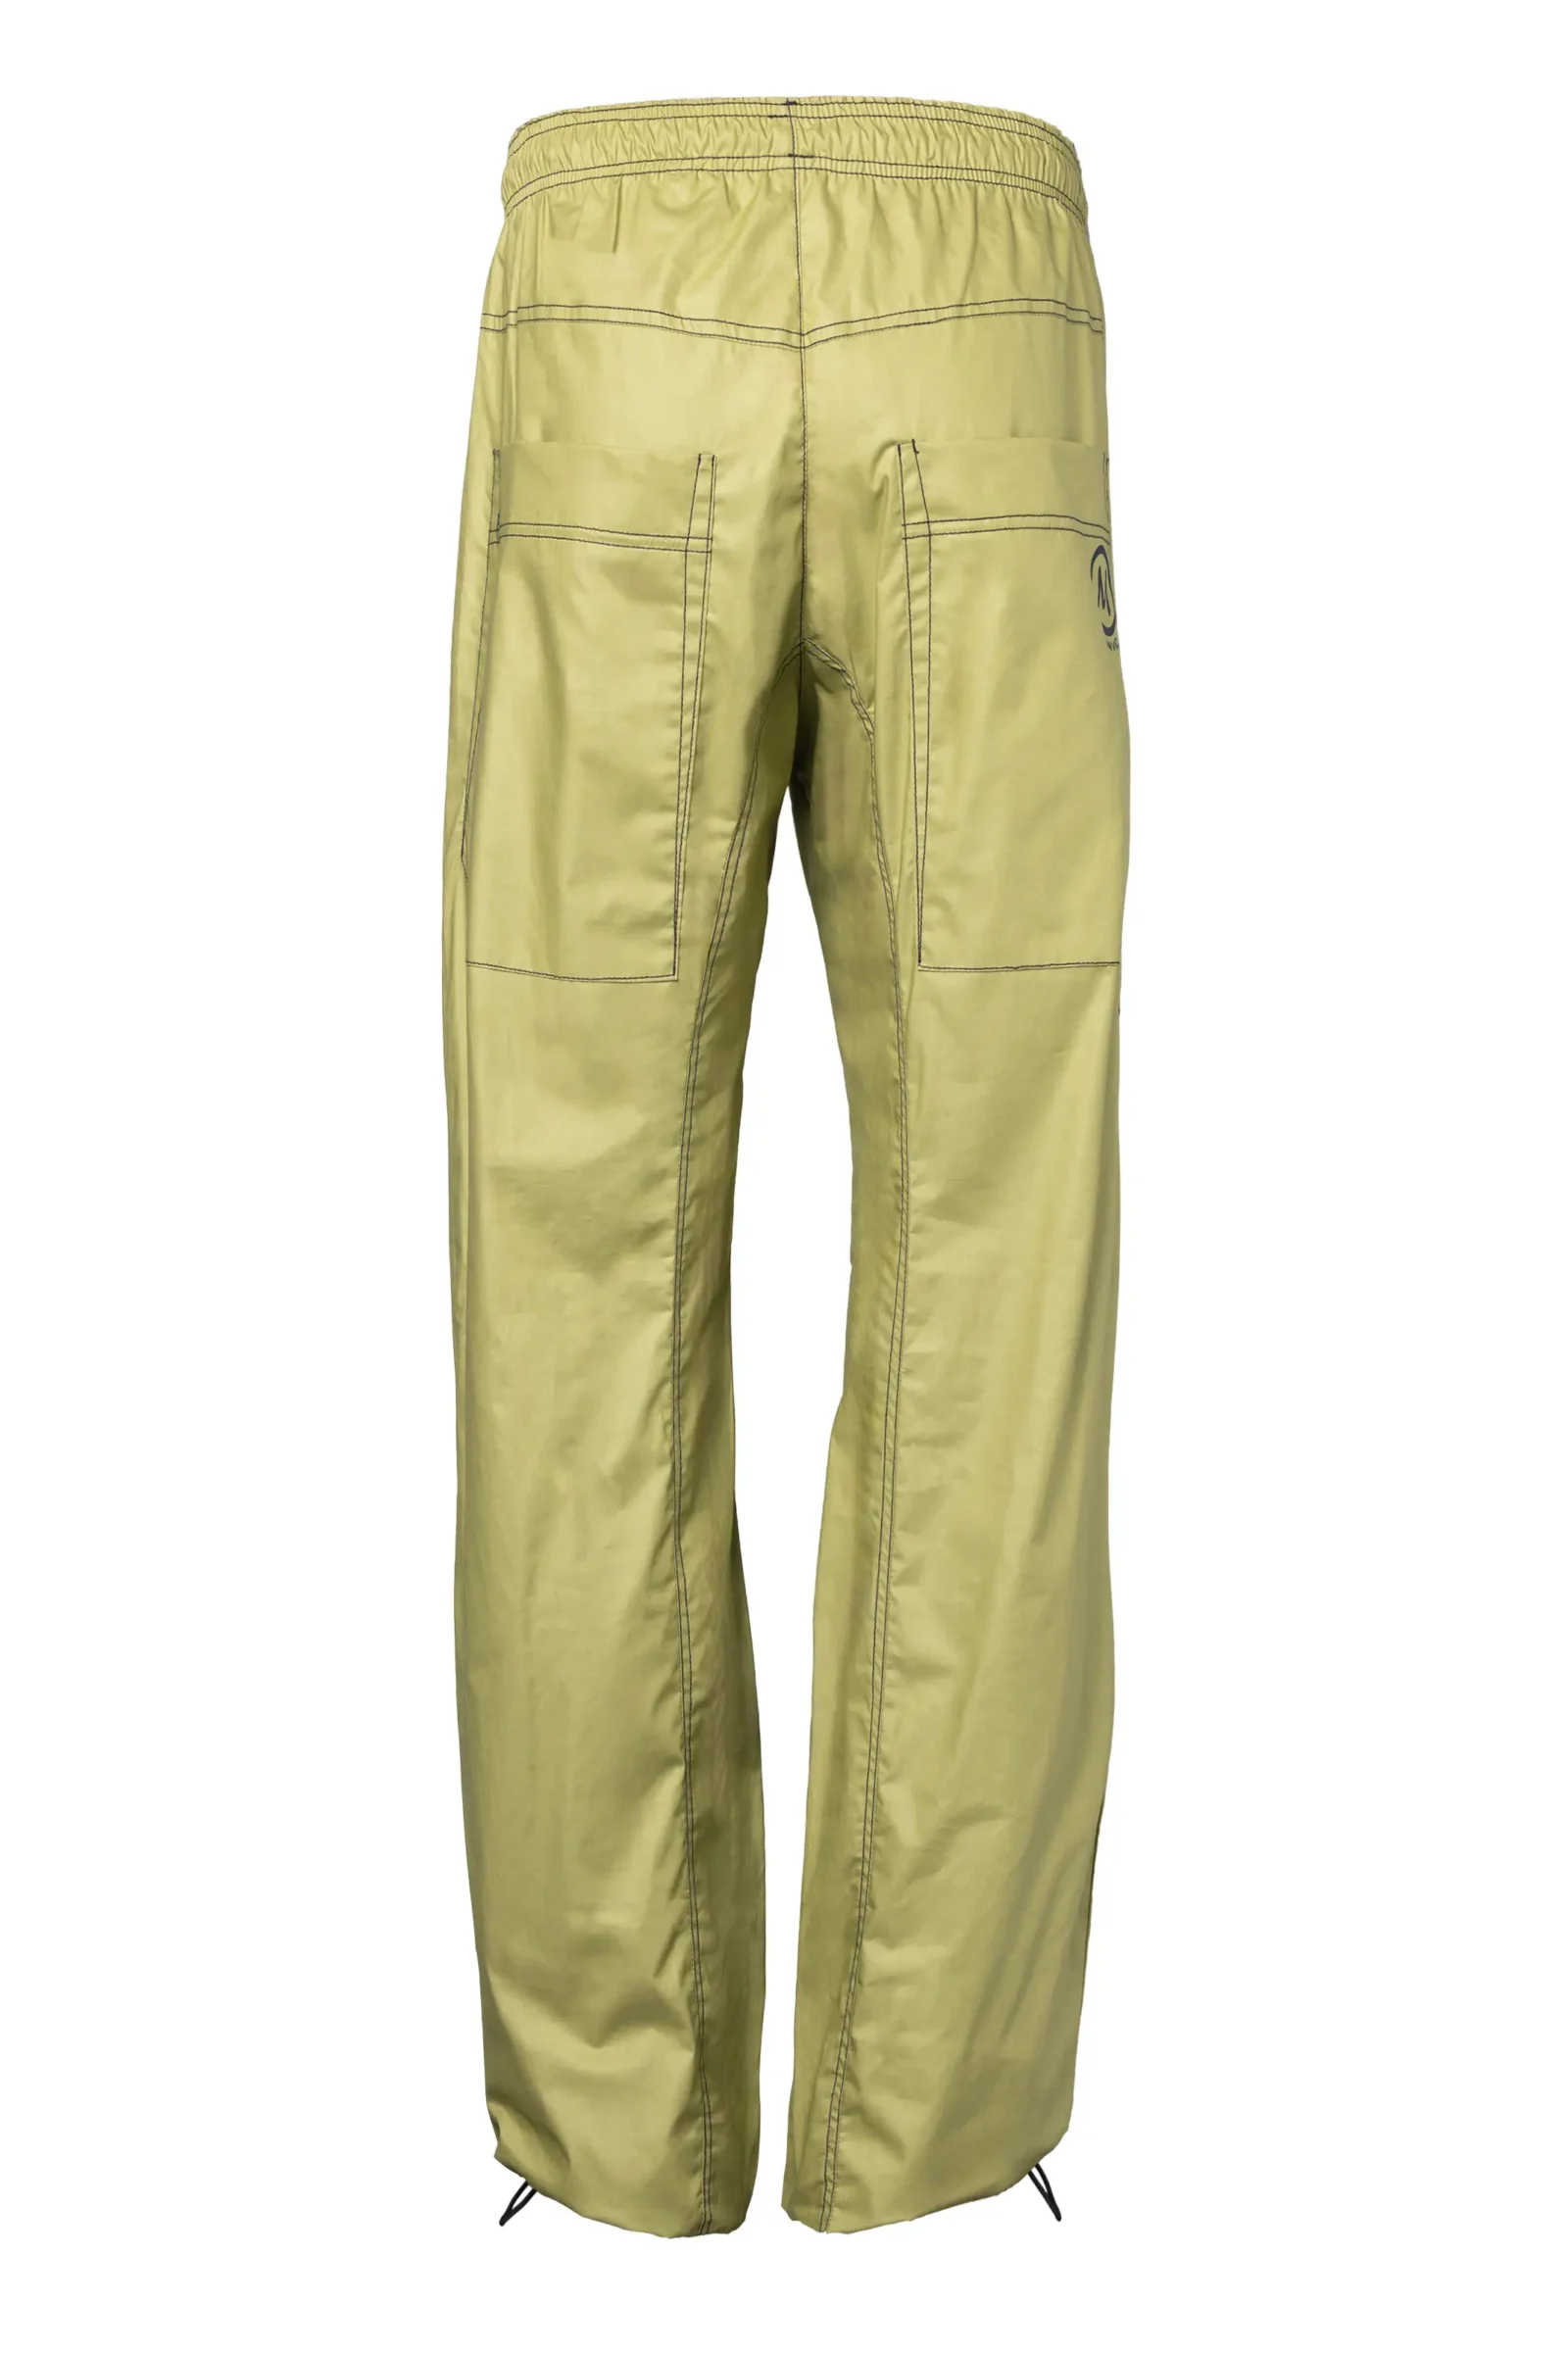 Pantalone uomo impermeabile - verde salvia - JIMMY MONVIC